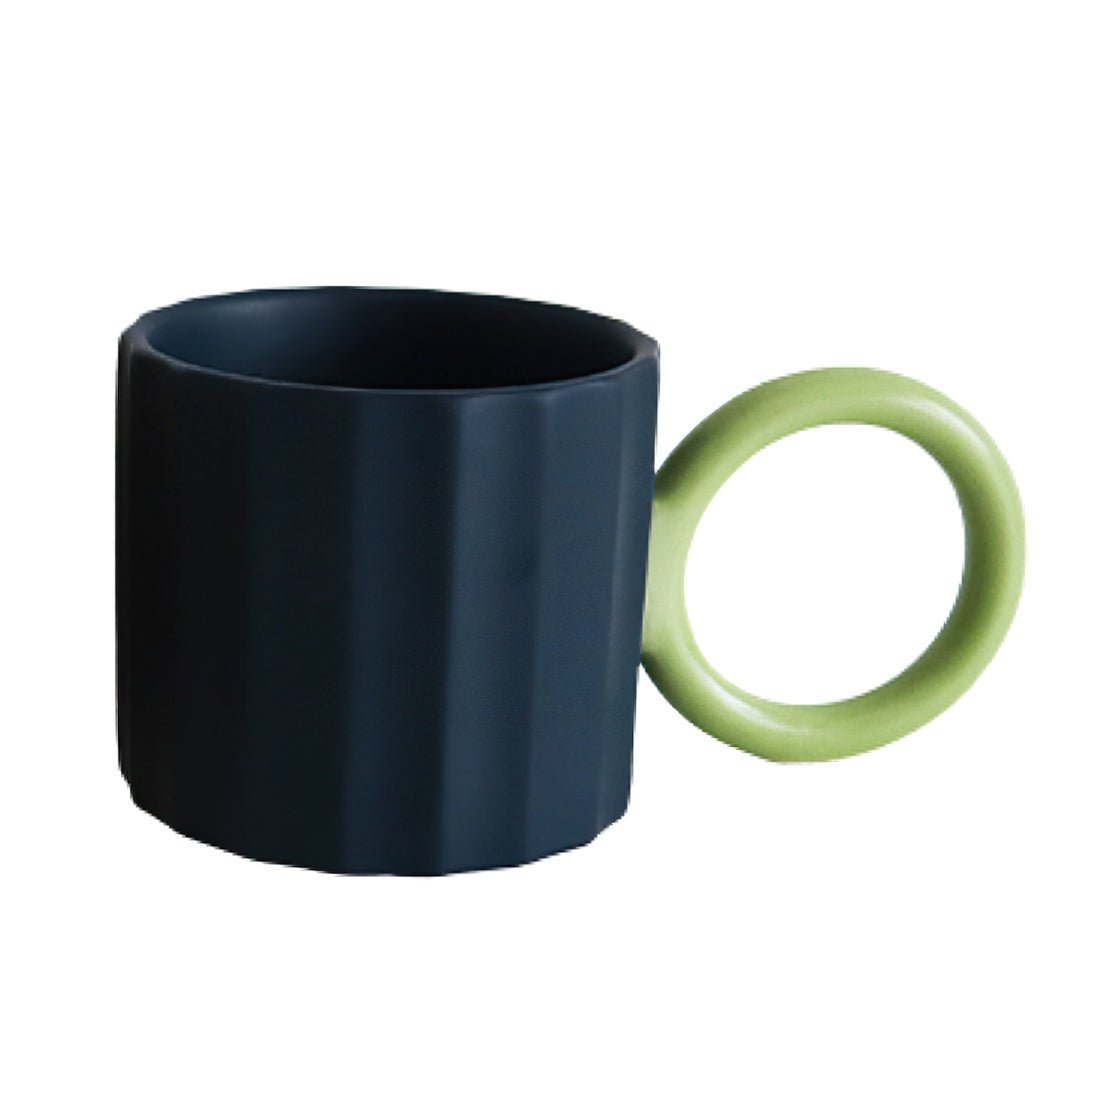 Blue, ceramic mug with a green, large, circle handle